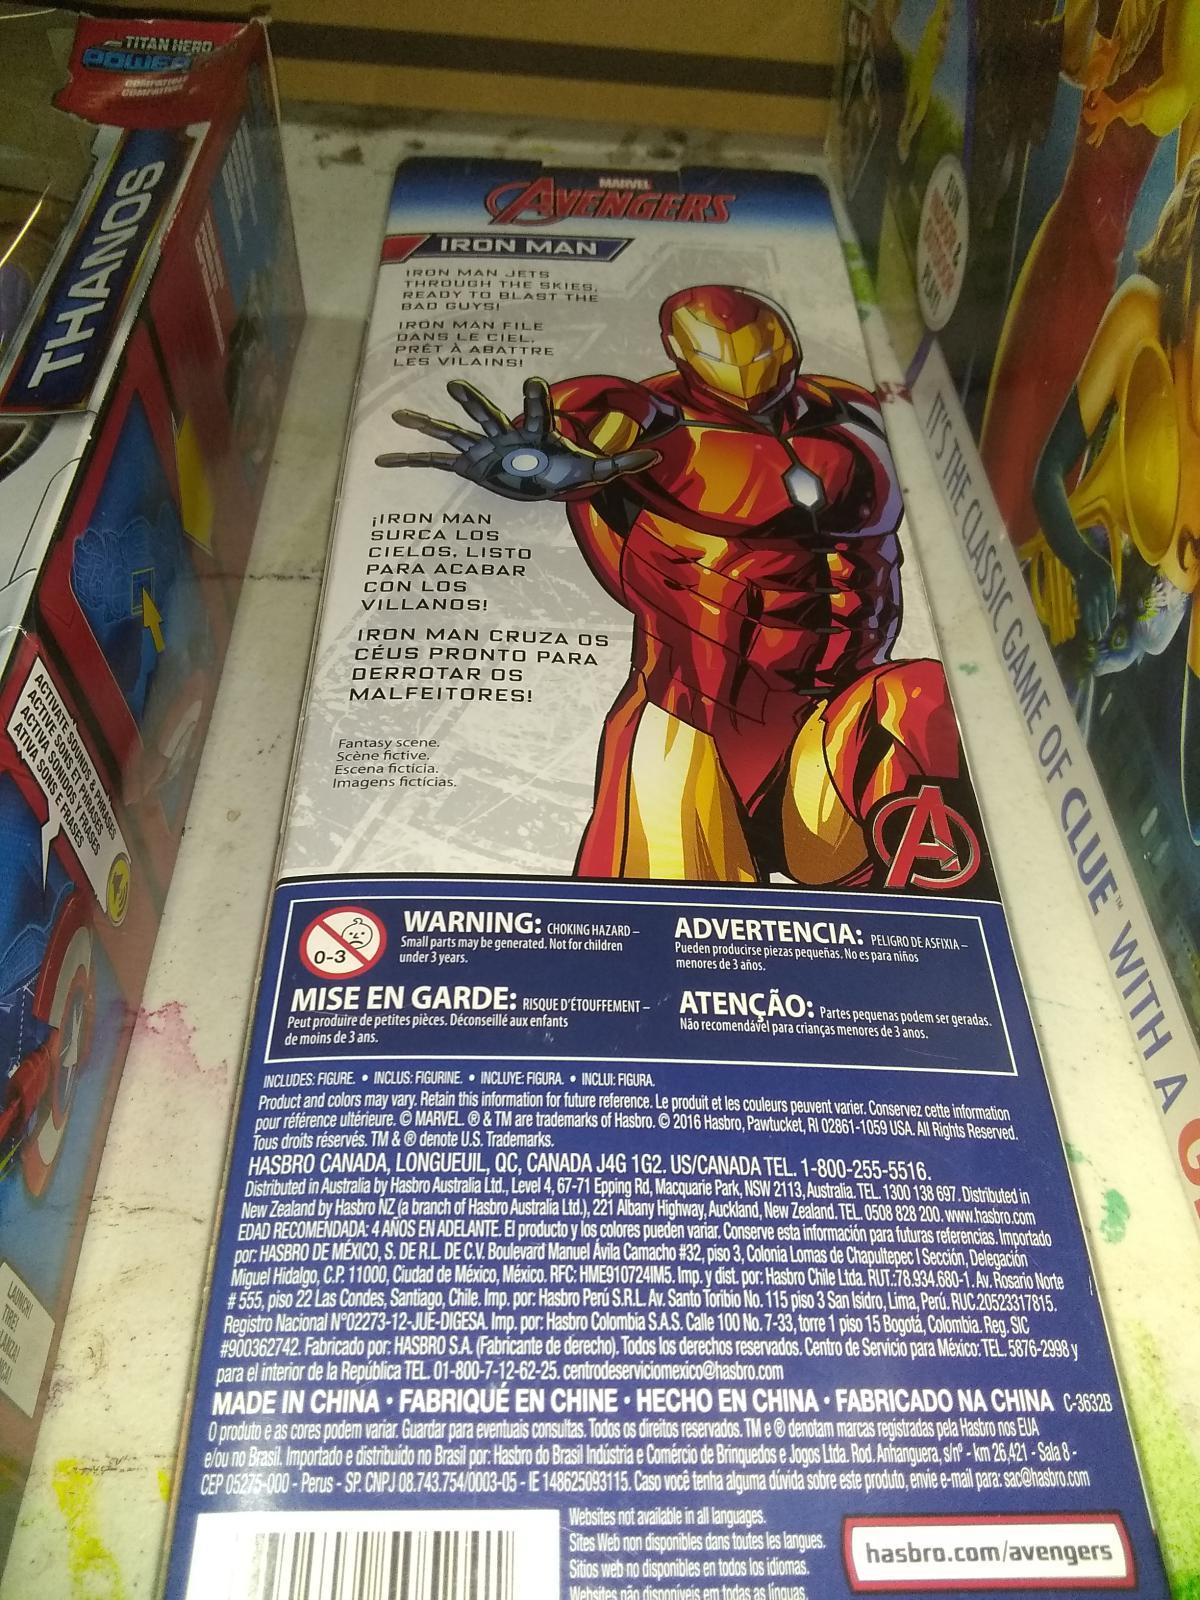 Marvel Avengers Figure - Iron Man